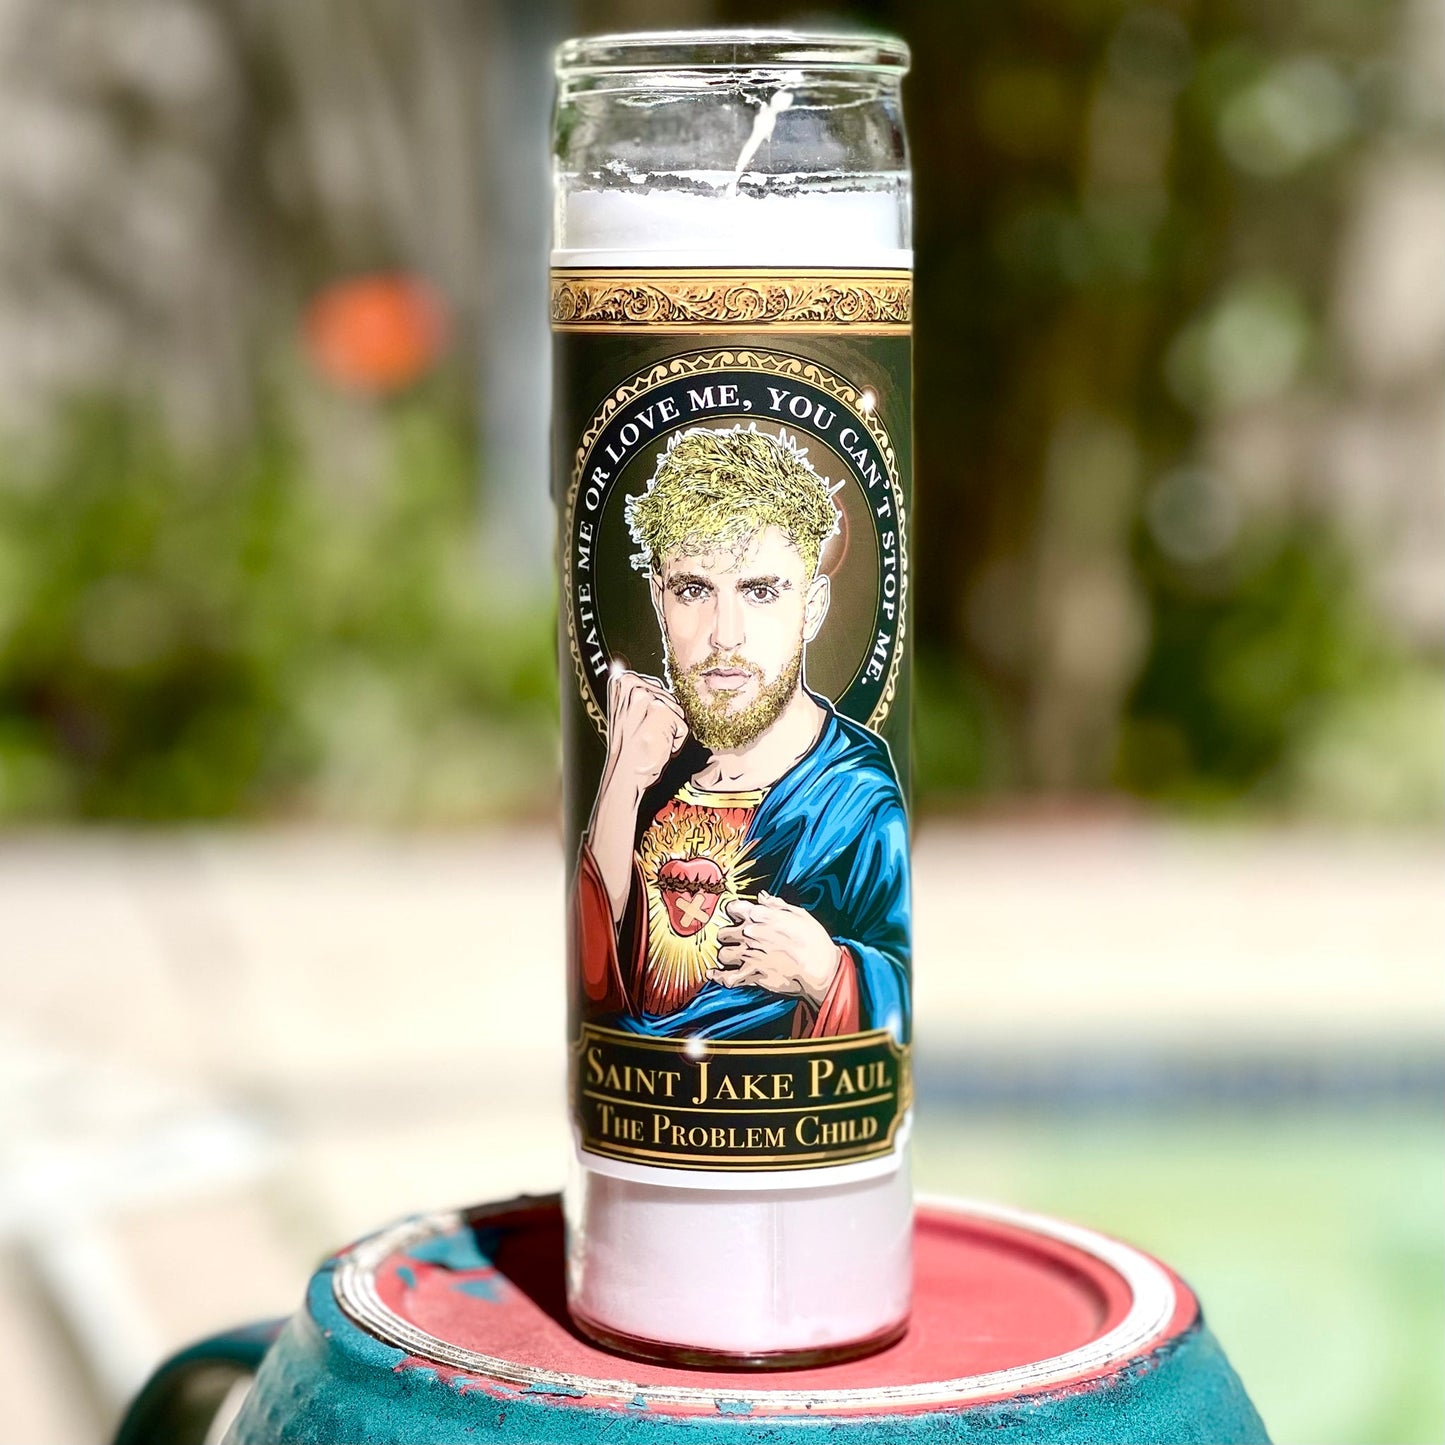 Saint Jake Paul The Problem Child Candle Cleaverandblade.com